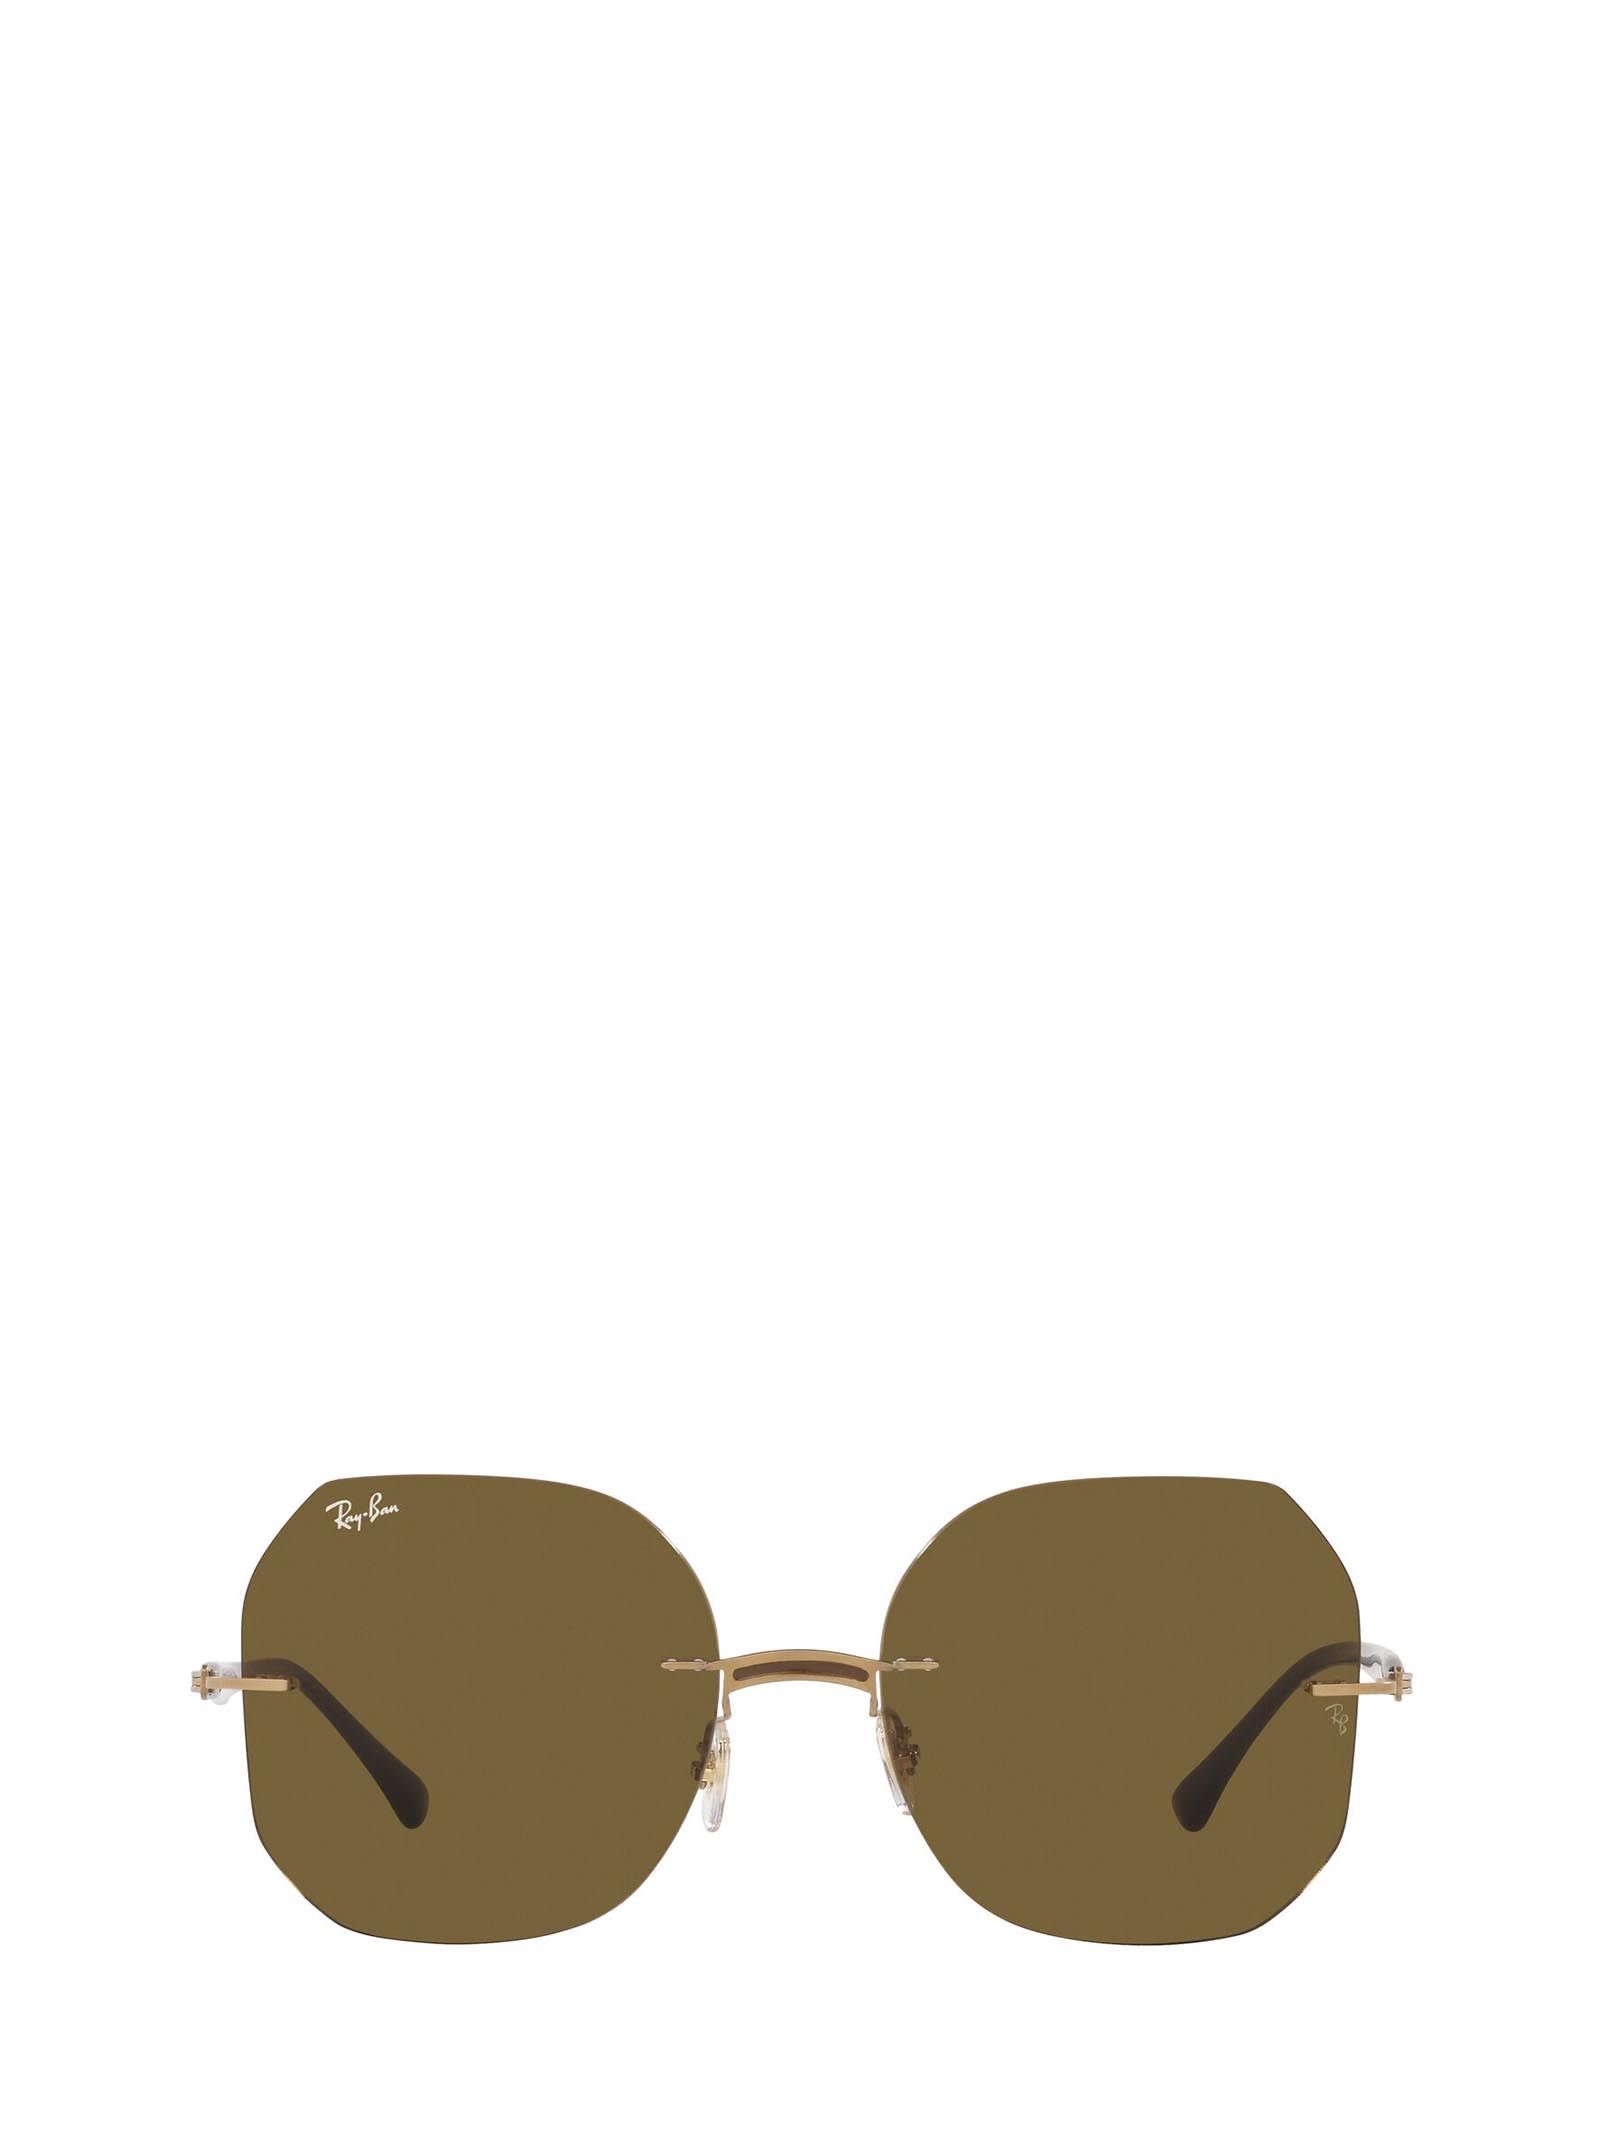 Ray-Ban Ray-ban Rb8067 Brown On Arista Sunglasses